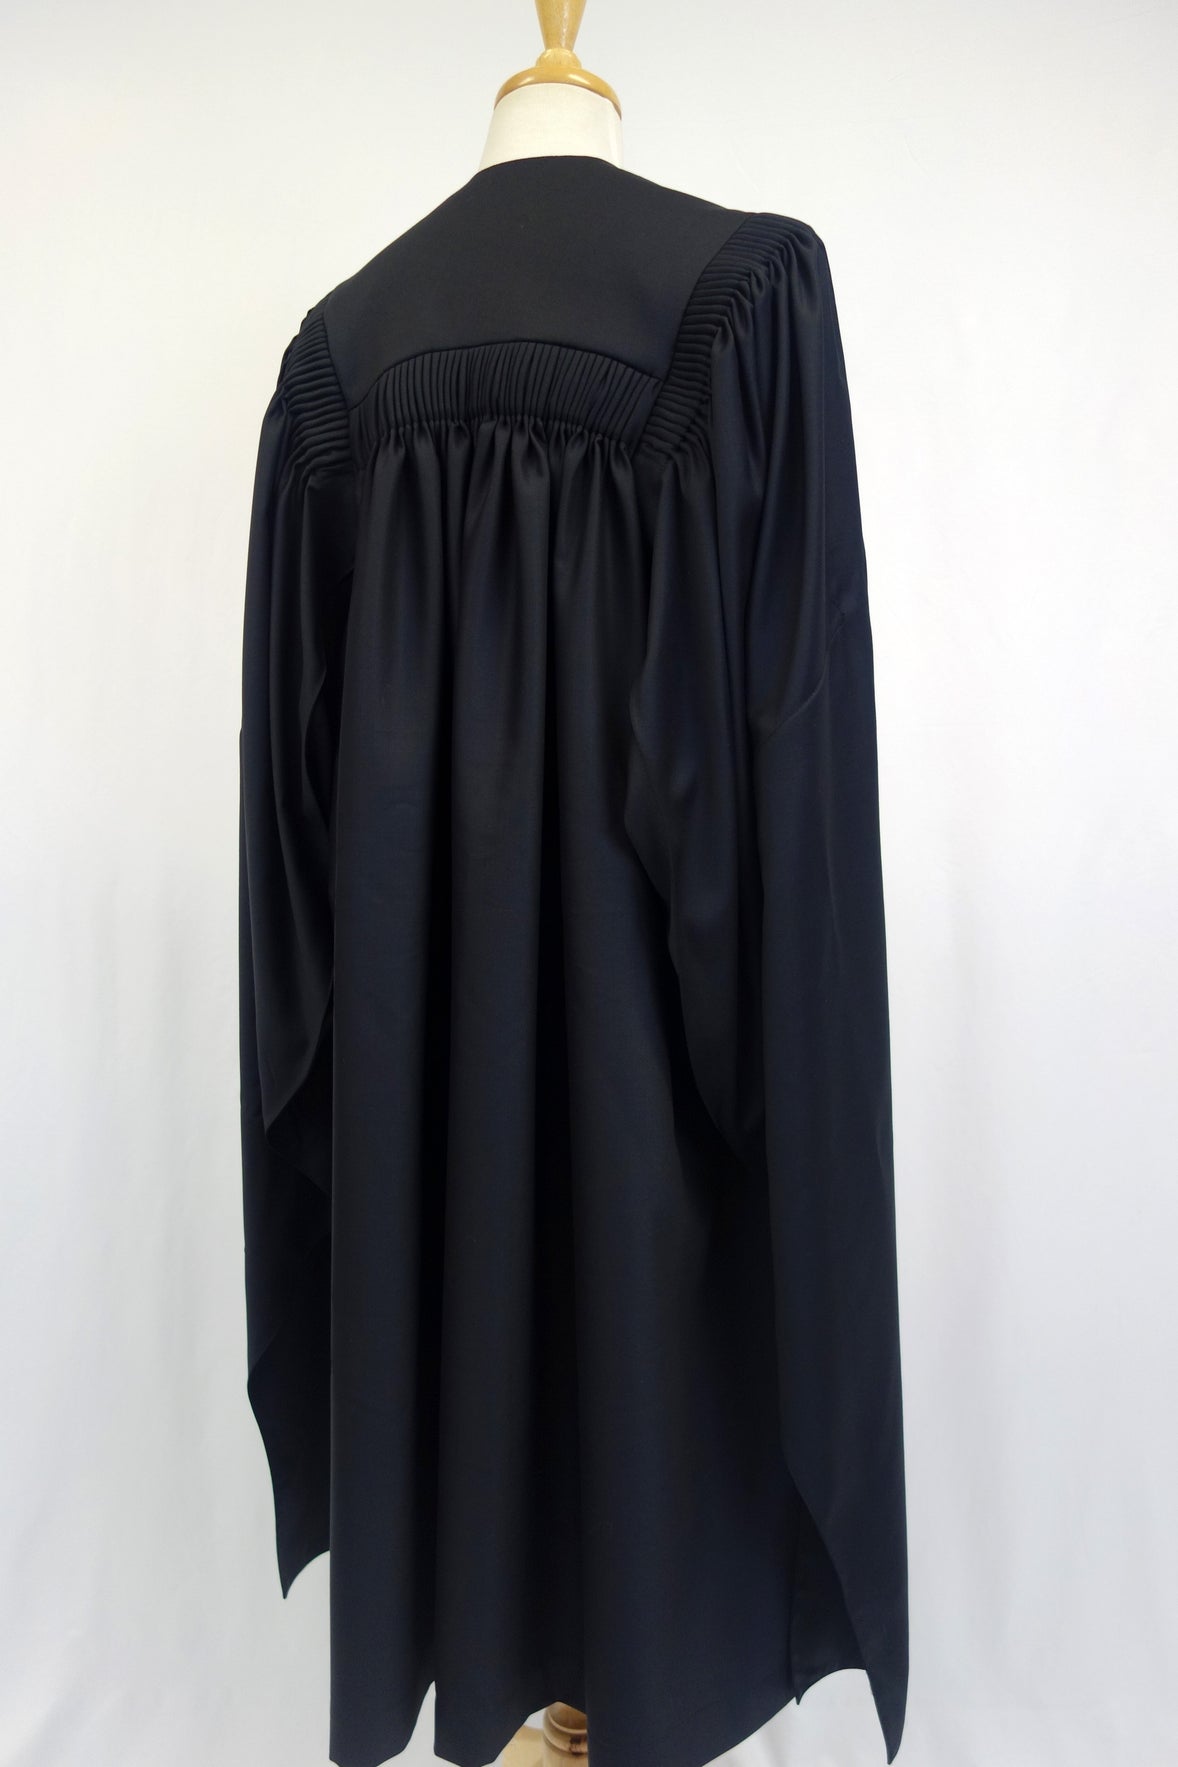 UWA PhD Graduation Gown Set - Gown, Hood and Bonnet